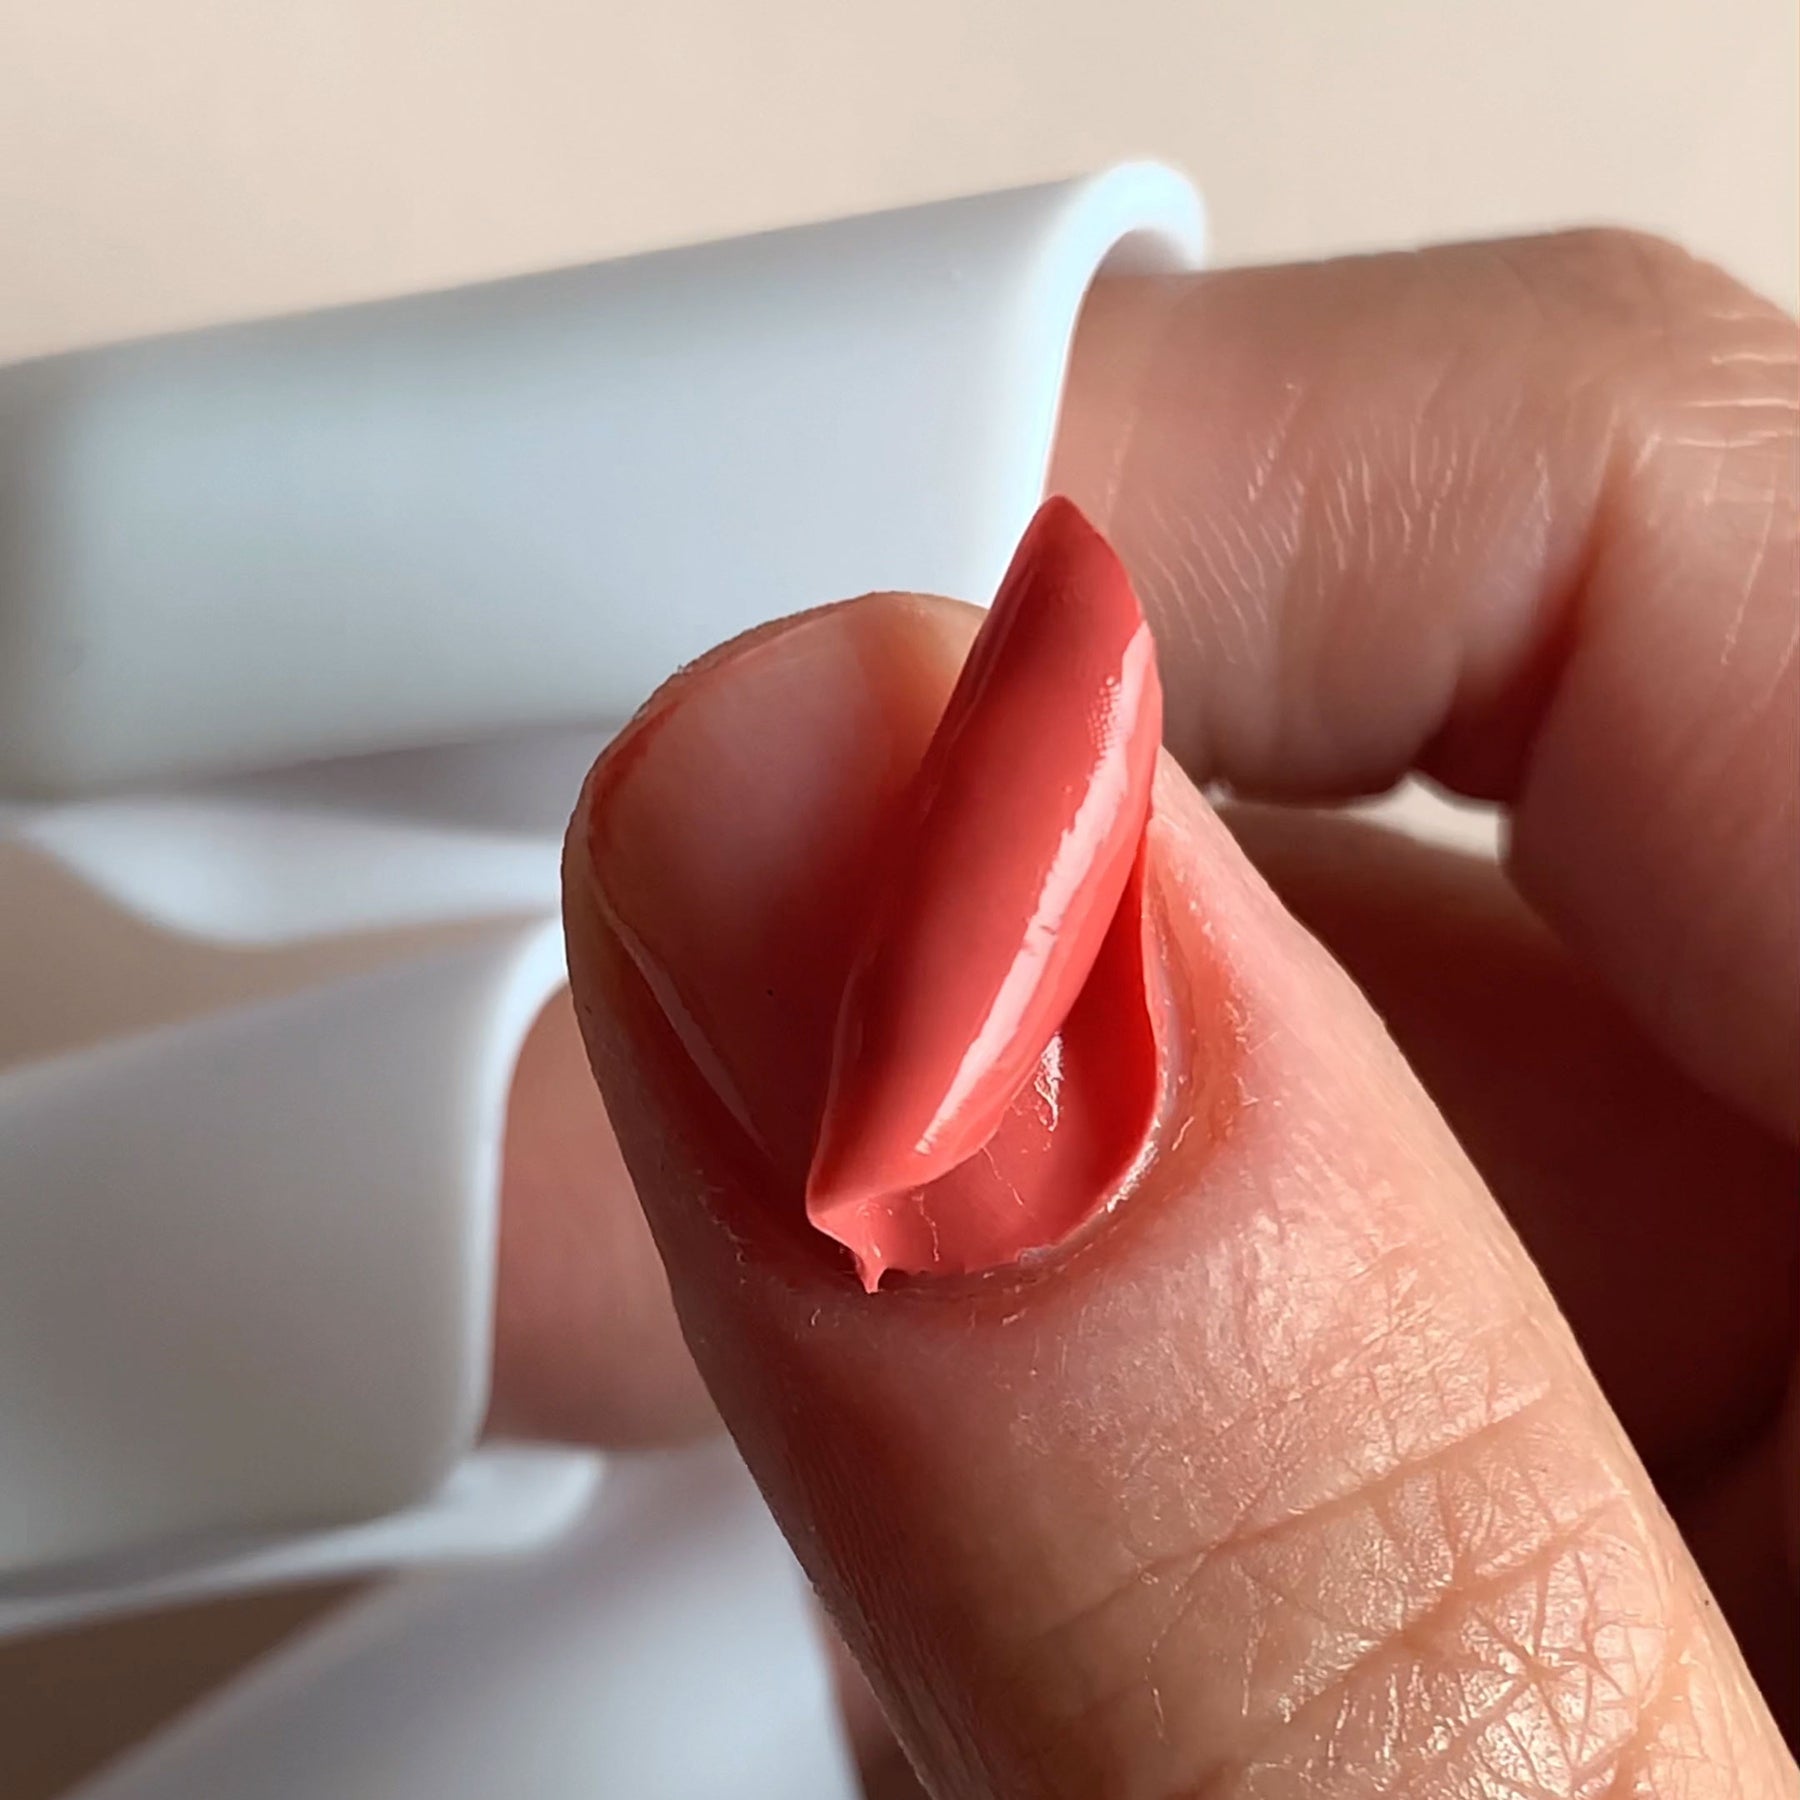 Dermatologist's secret for removing gel nail polish at home